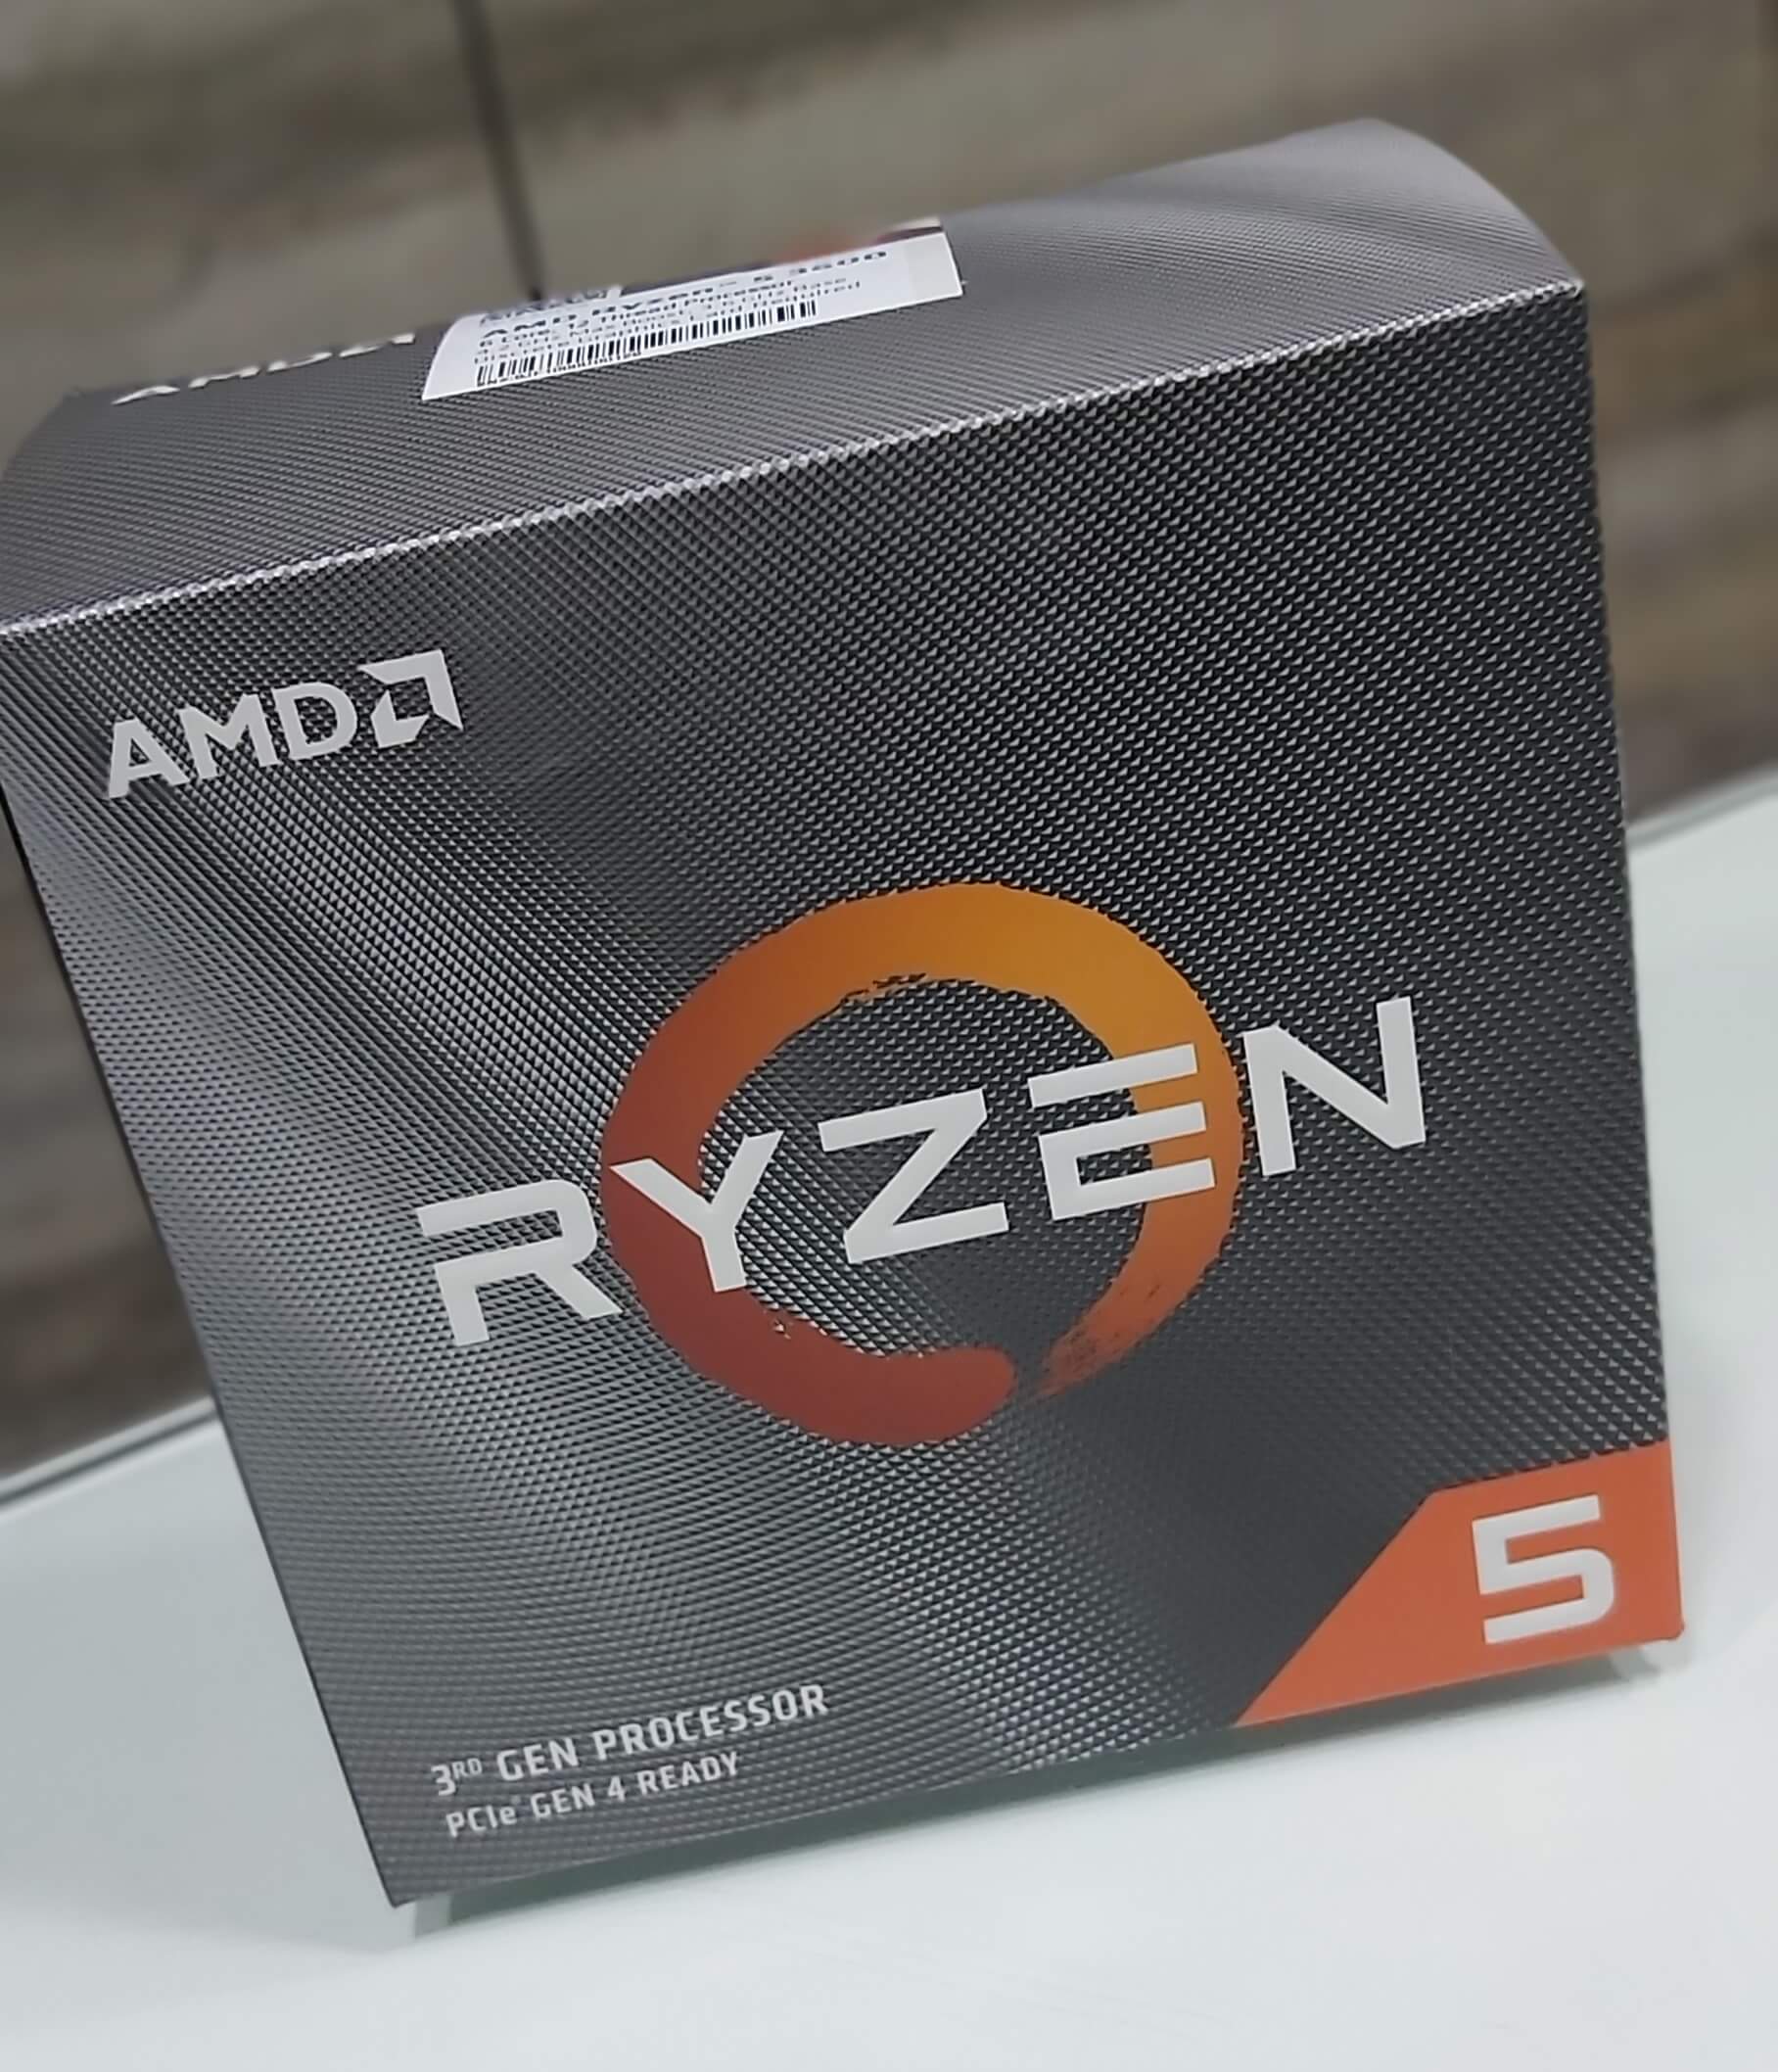 AMD Ryzen 5 3600 (3.6 GHz / 4.2 GHz) - Processeur - Garantie 3 ans